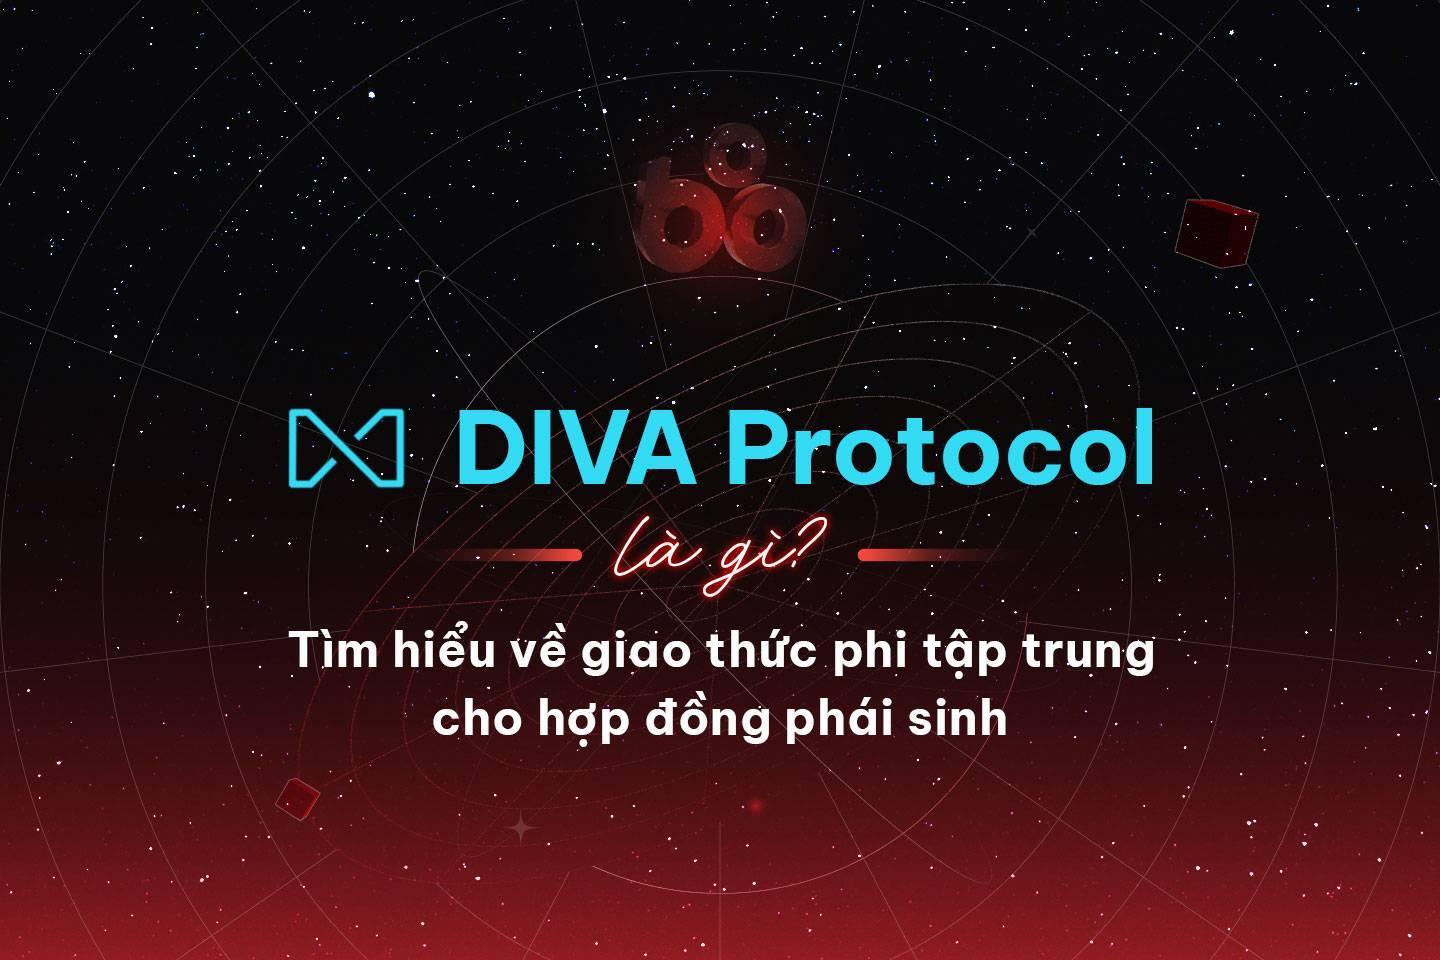 diva-protocol-la-gi-tim-hieu-ve-giao-thuc-phi-tap-trung-cho-hop-dong-phai-sinh